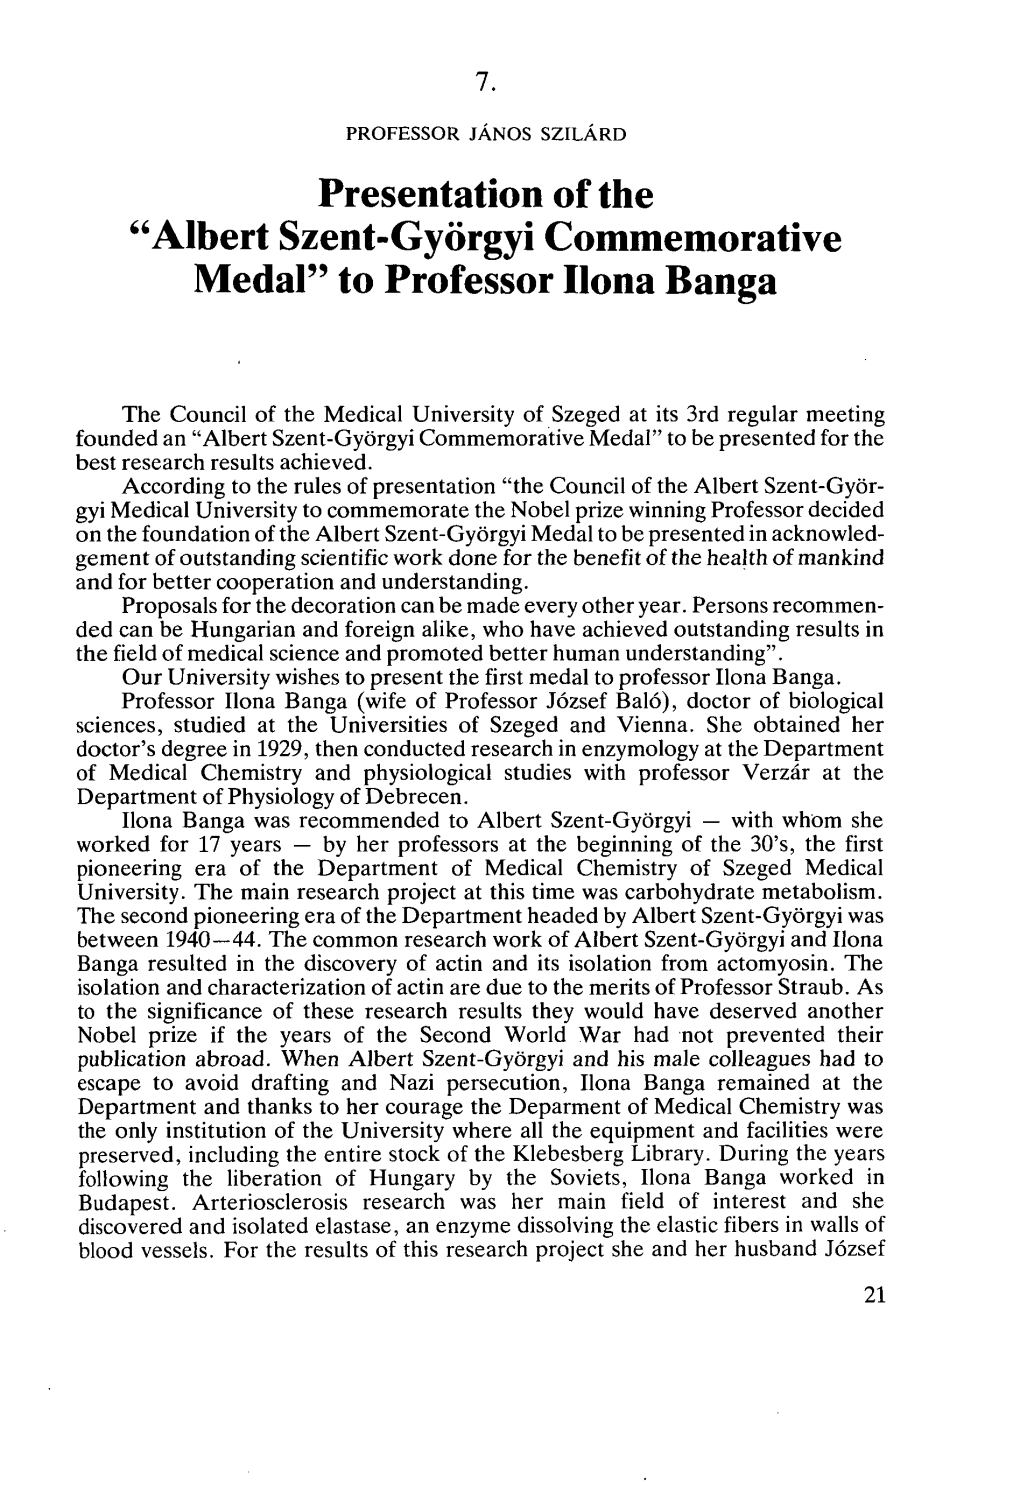 "Albert Szent-Györgyi Commemorative Medal" to Professor Ilona Banga